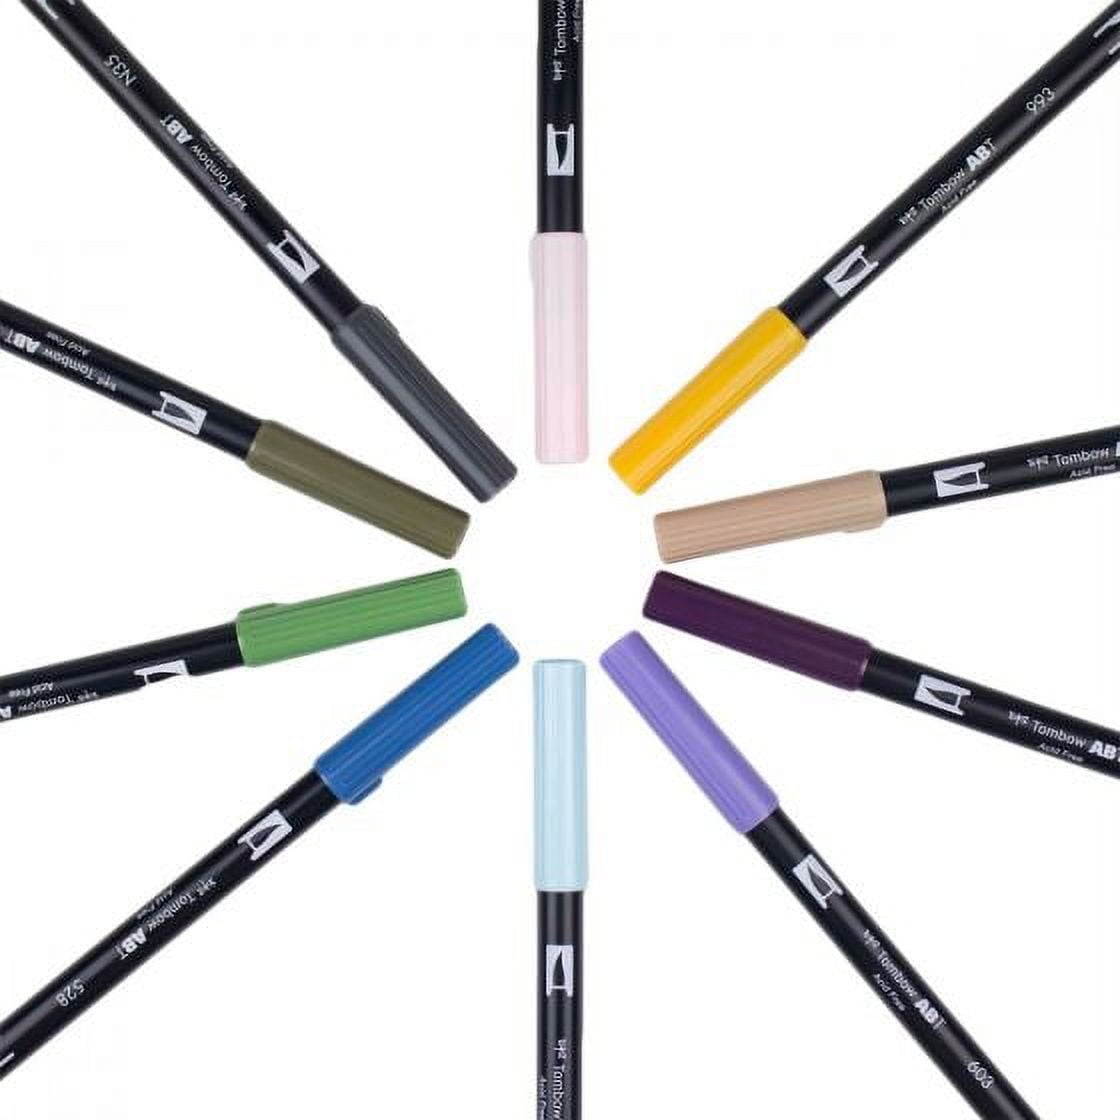 Tombow 56197 Dual Brush Pen Art Markers, Desert Flora, 10-Pack. Blendable,  Brush and Fine Tip Markers - Yahoo Shopping